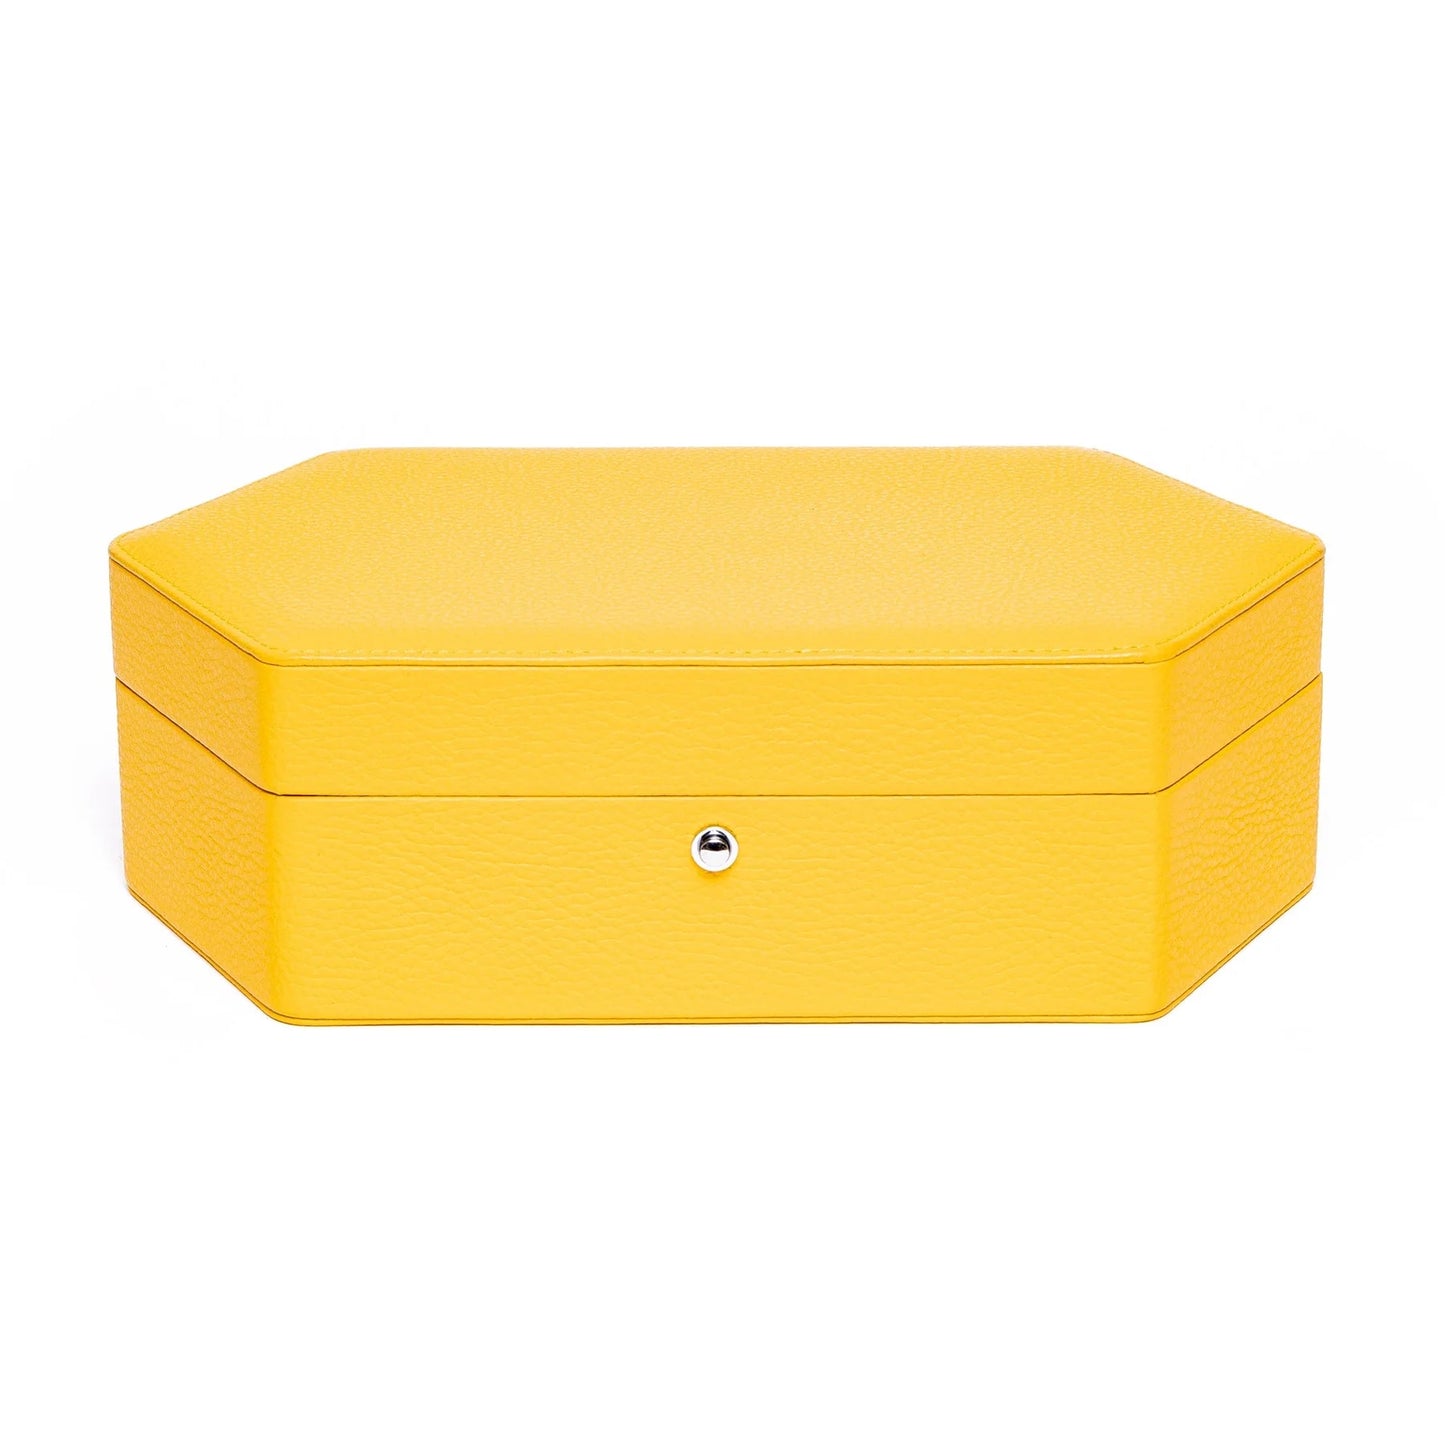 Portobello 3 Watch Box - Yellow